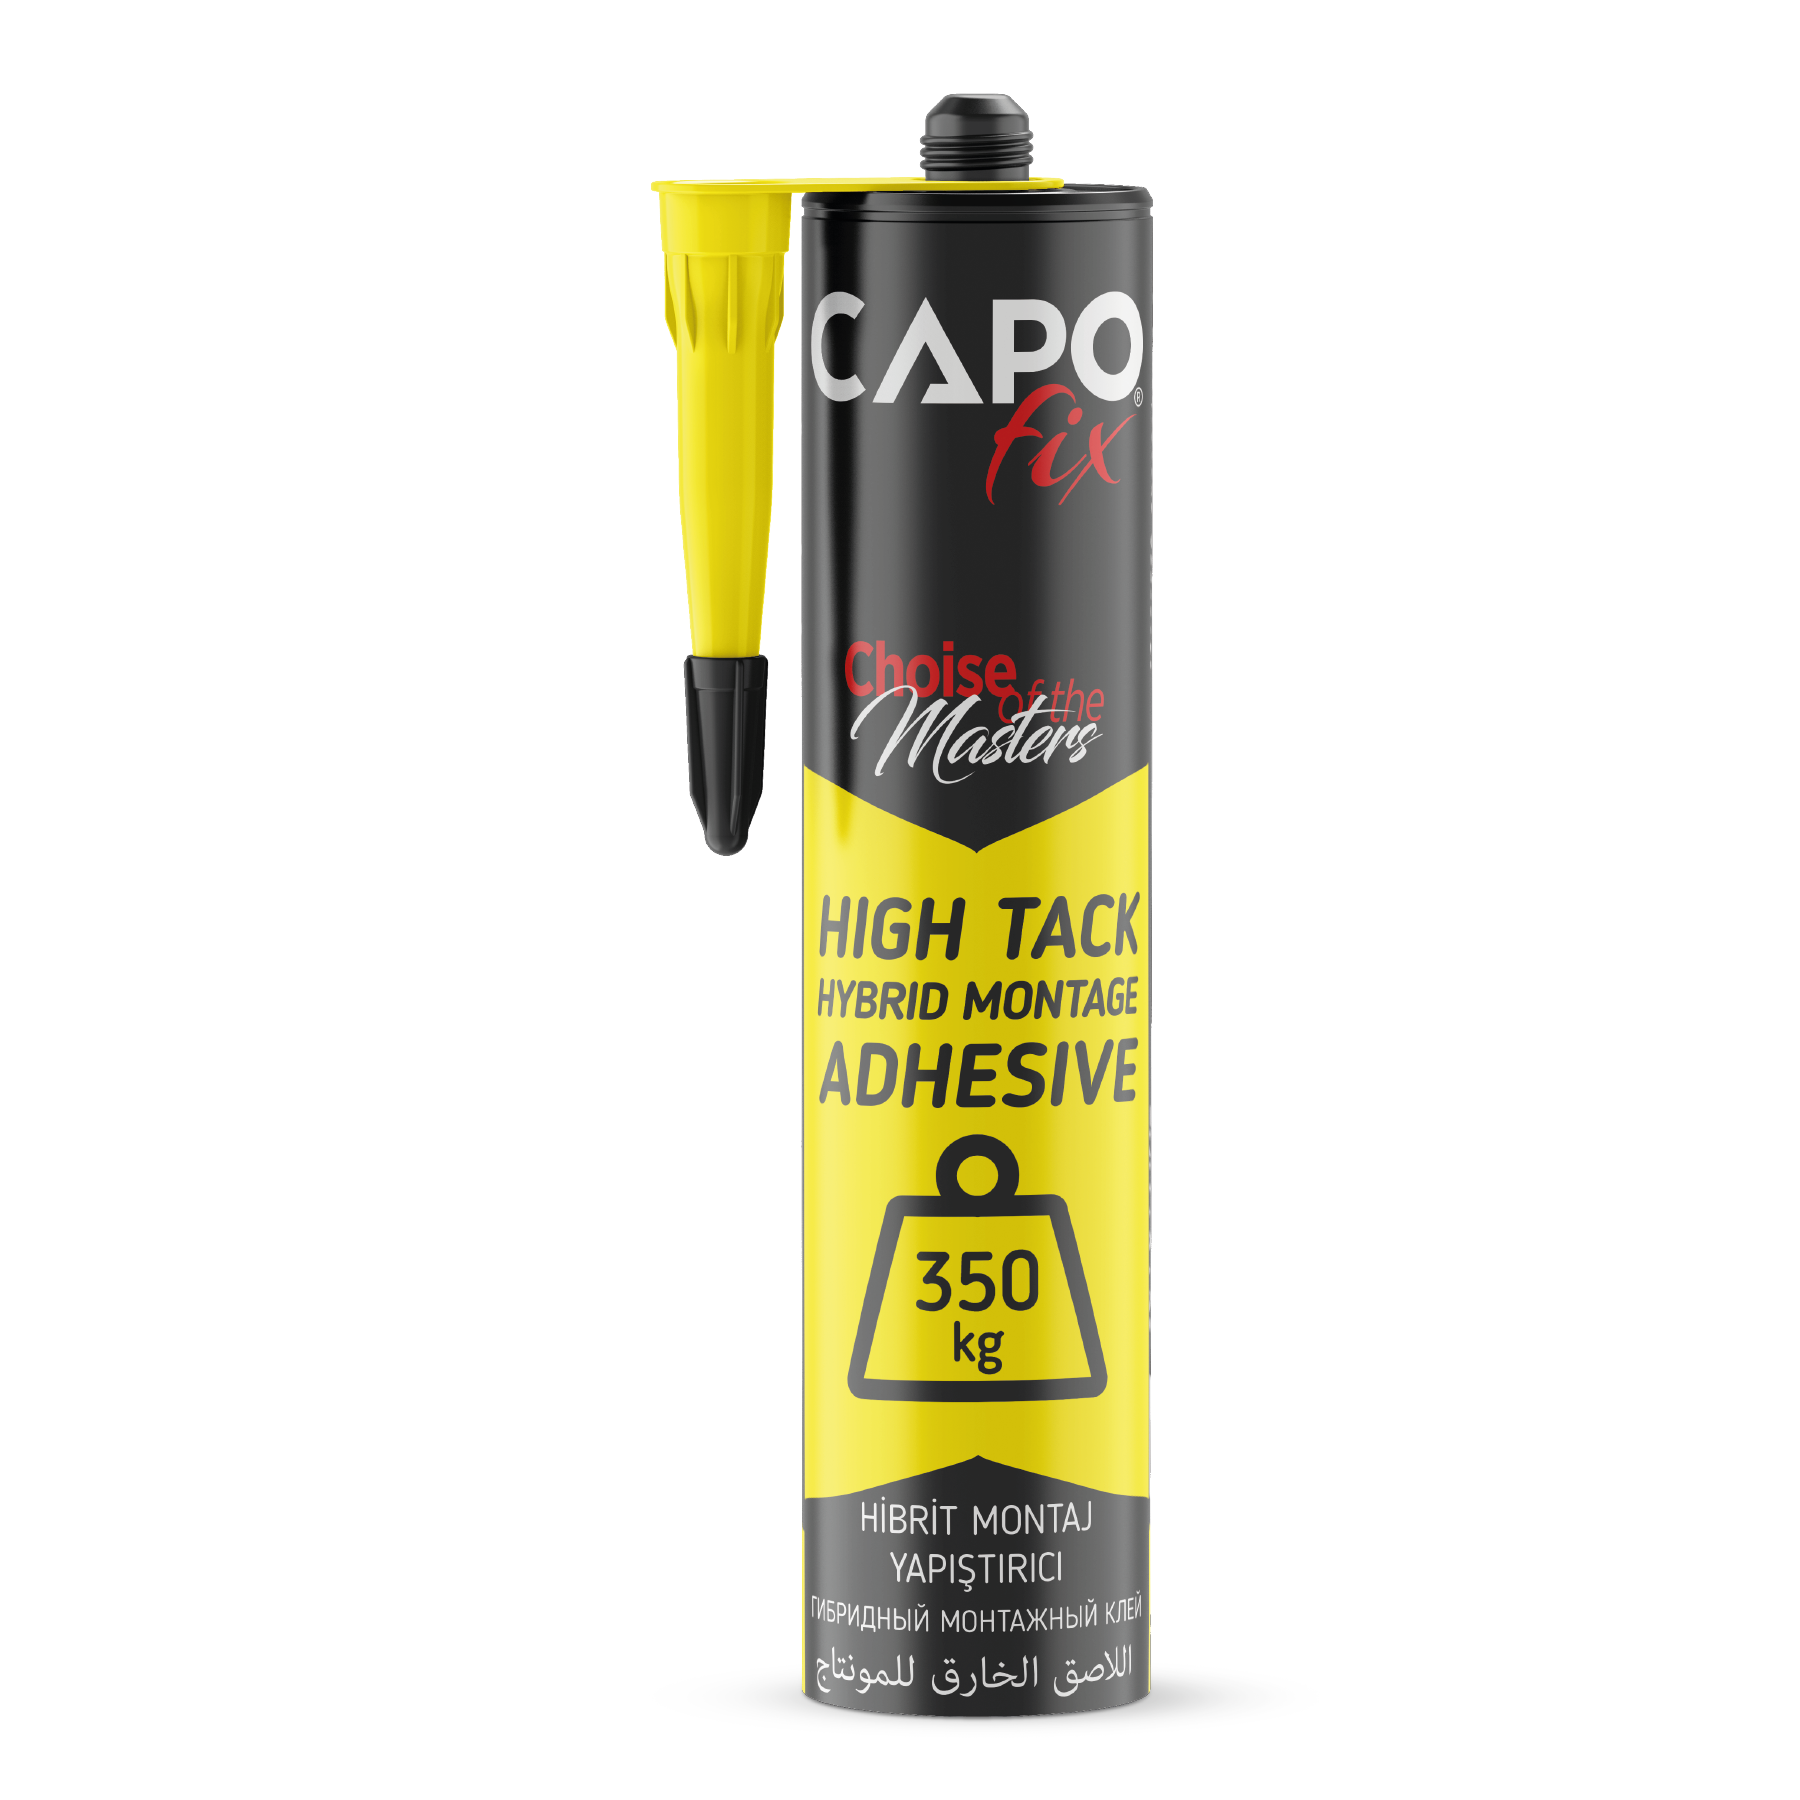 .CAPO fix High Tack Hybrid Montage Adhesive.